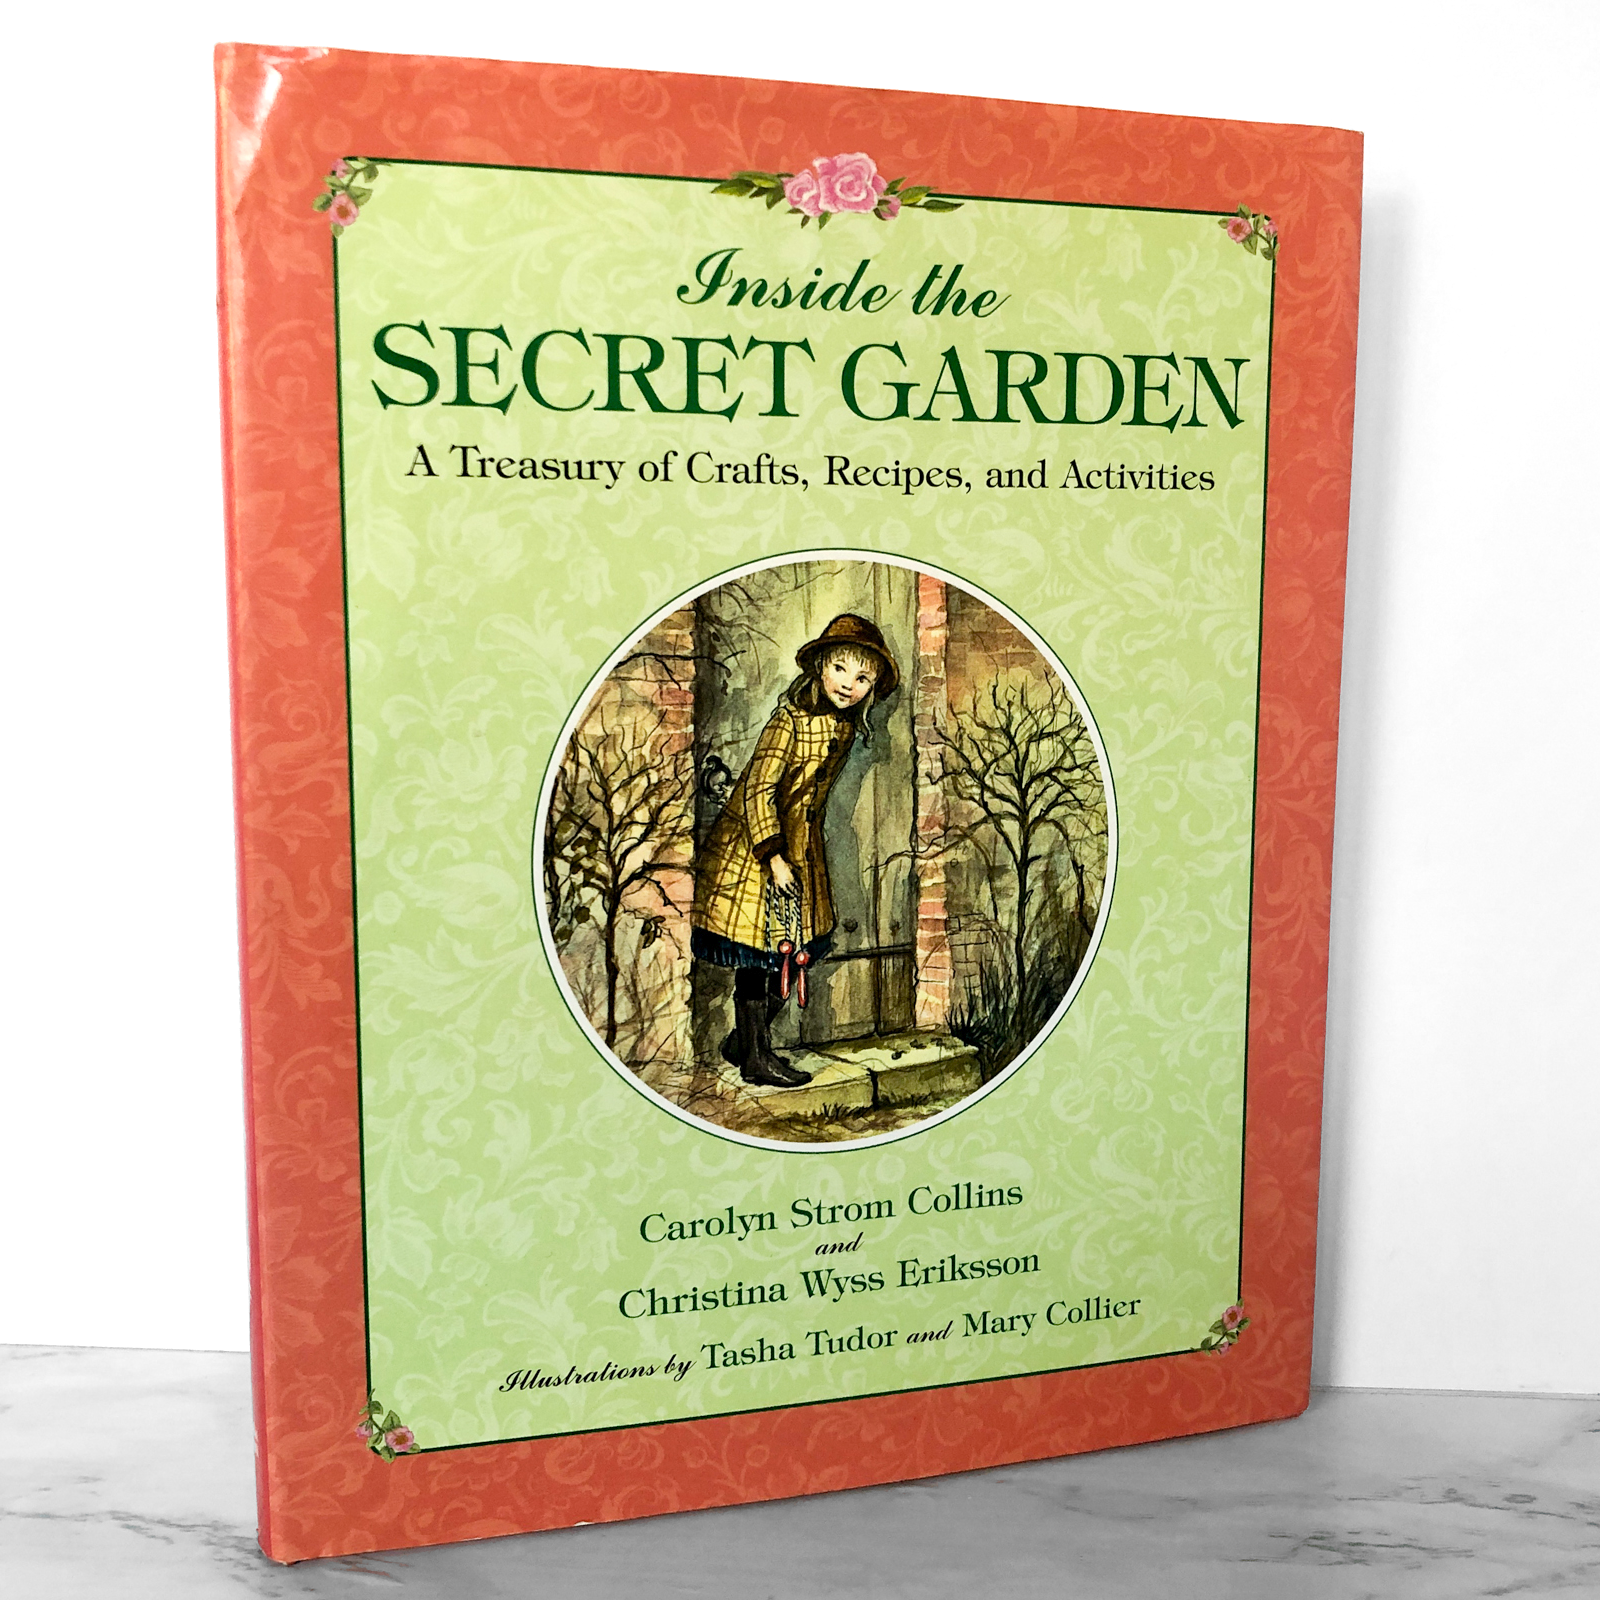 the secret garden original book cover